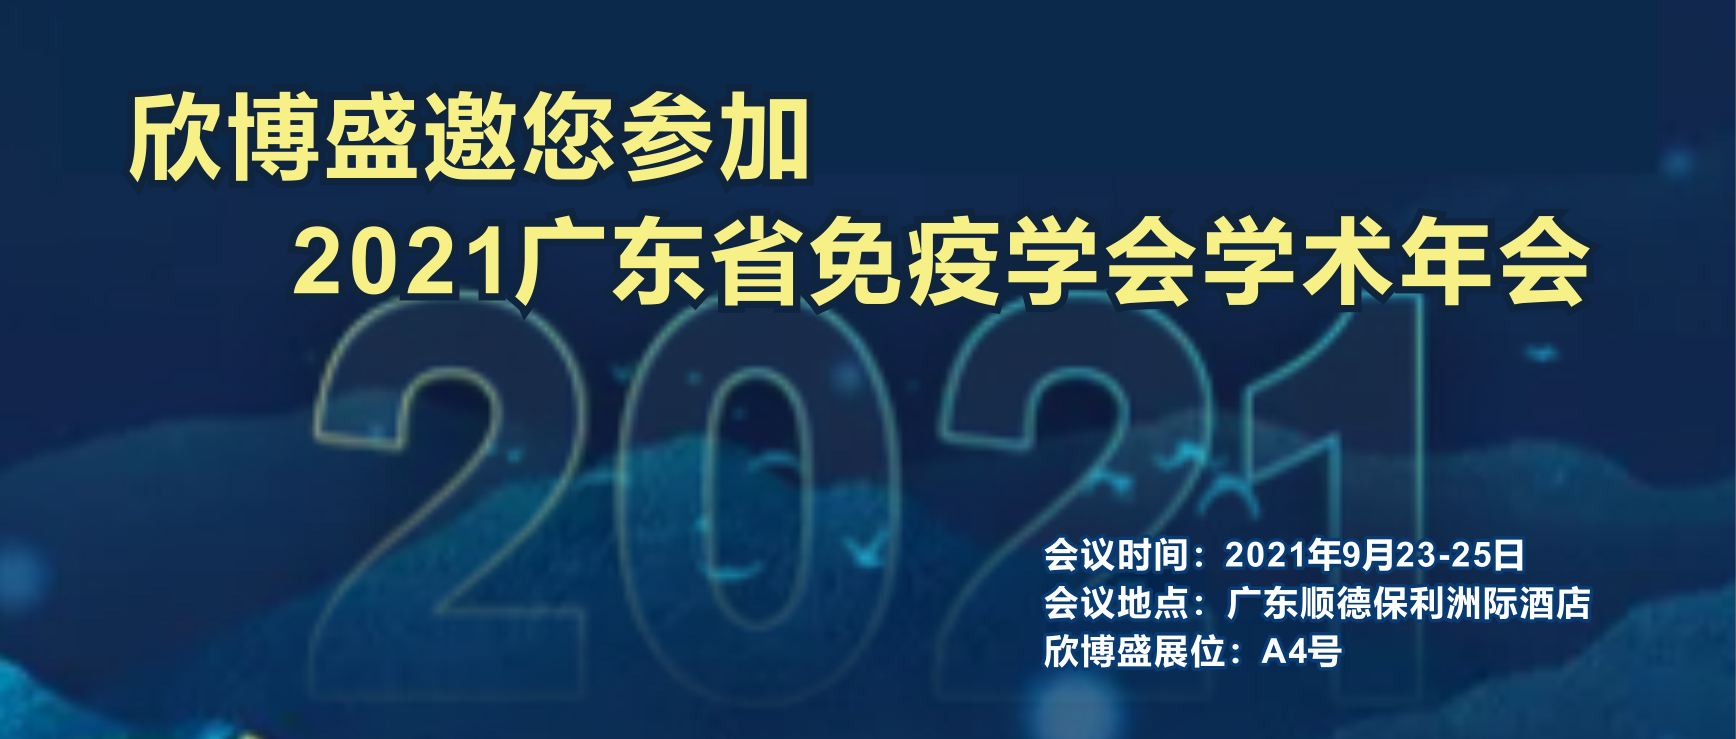 3868la银河总站邀您参加2021广东省免疫学会学术年会